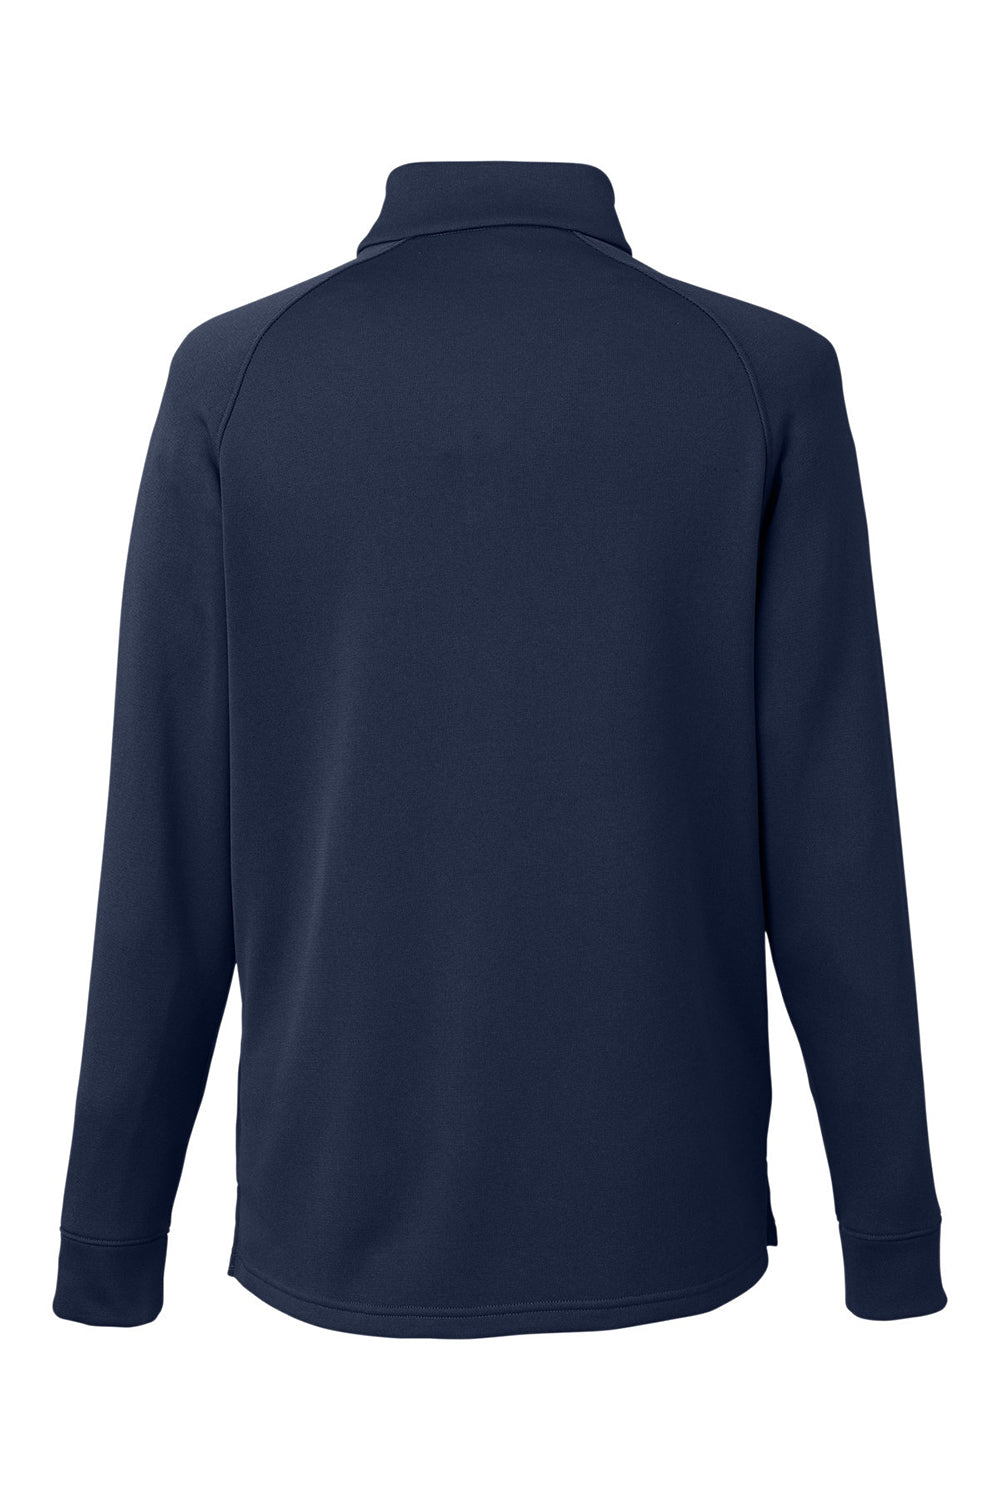 Core 365 CE801 Mens Fusion ChromaSoft Fleece 1/4 Zip Sweatshirt Classic Navy Blue Flat Back